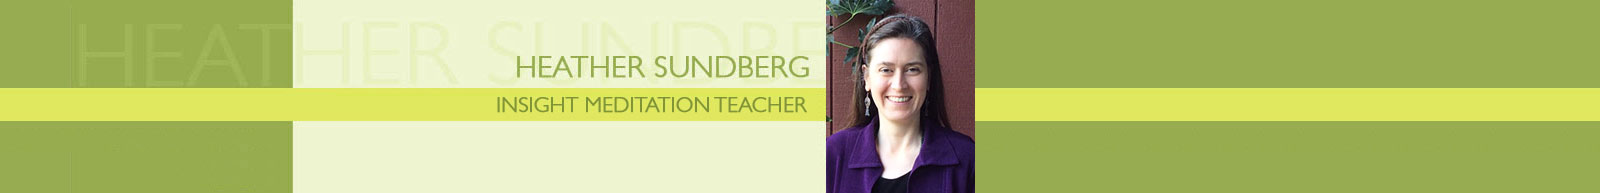 Heather Sundberg - Insight Meditation Teacher